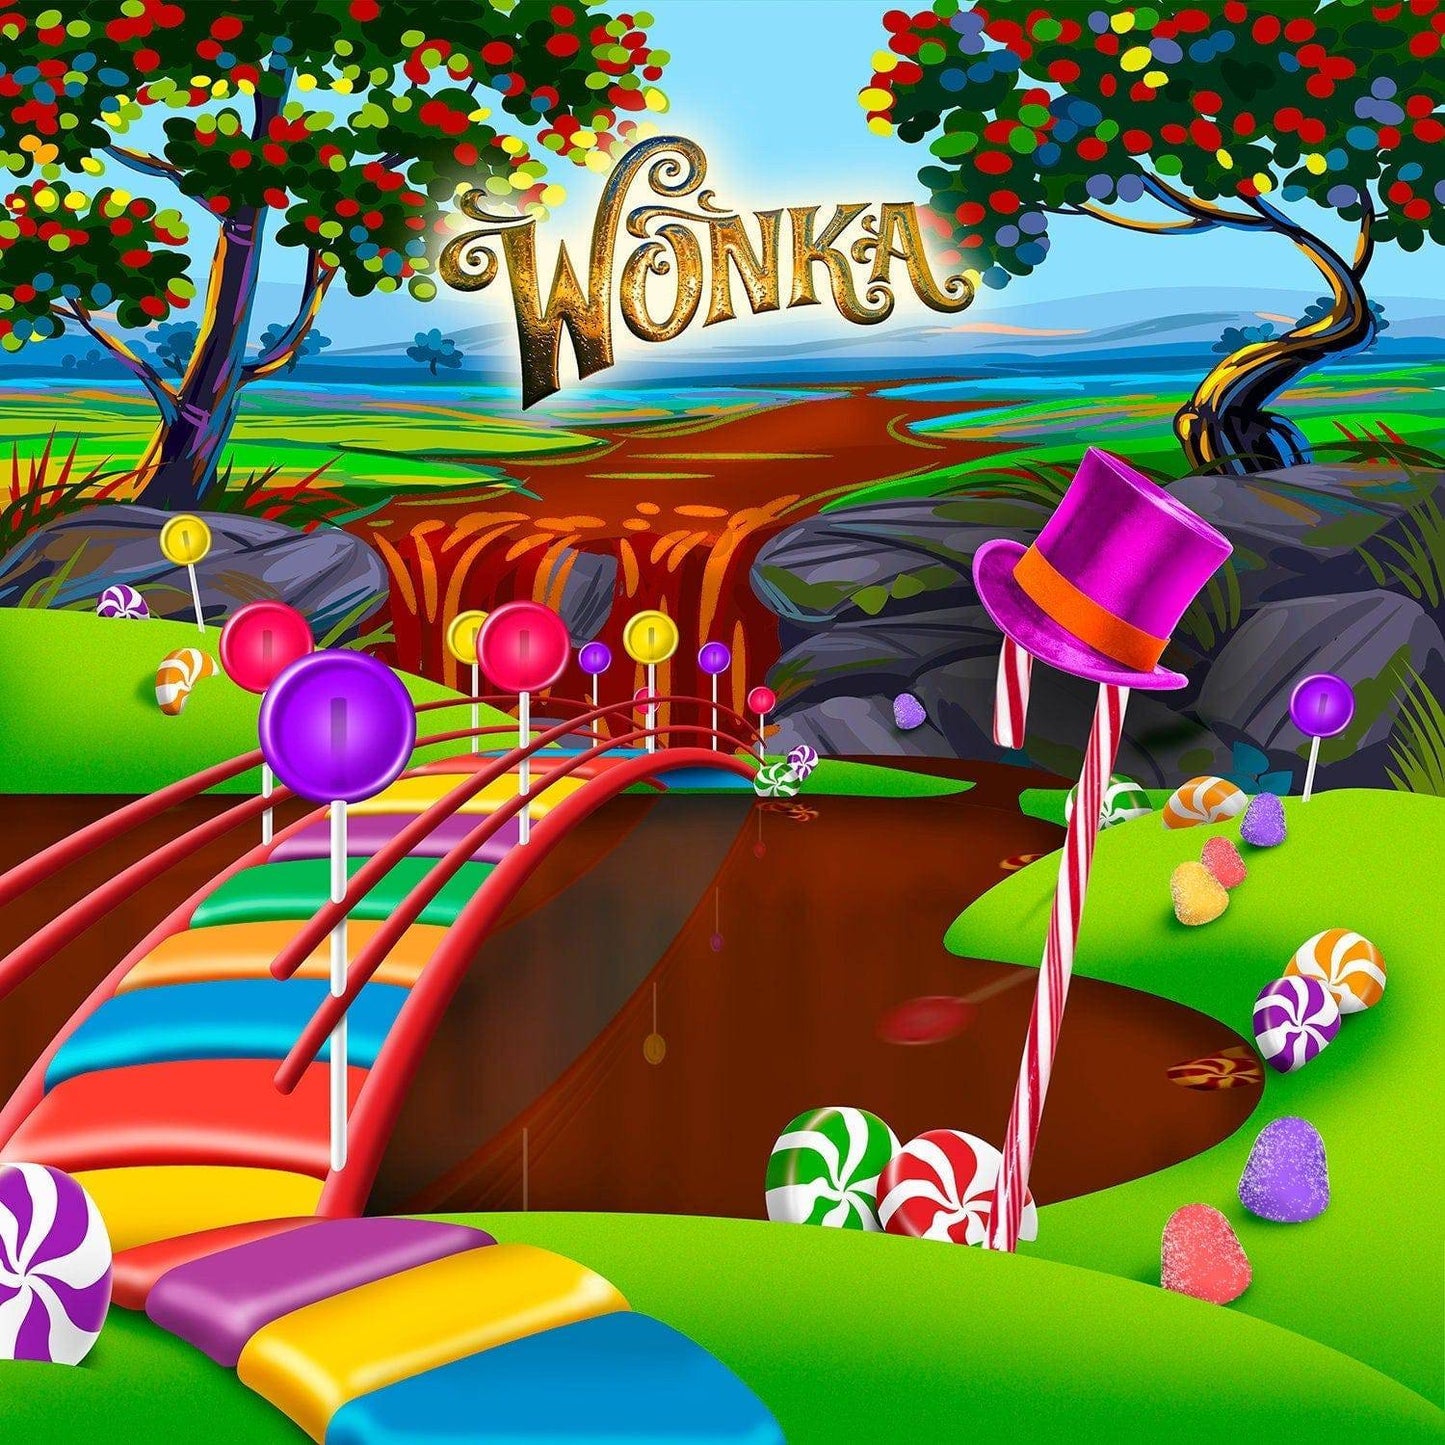 Wonka Candyland Backdrop Photo Backdrop, Backgrounds or Banners - Pro 10  x 8  